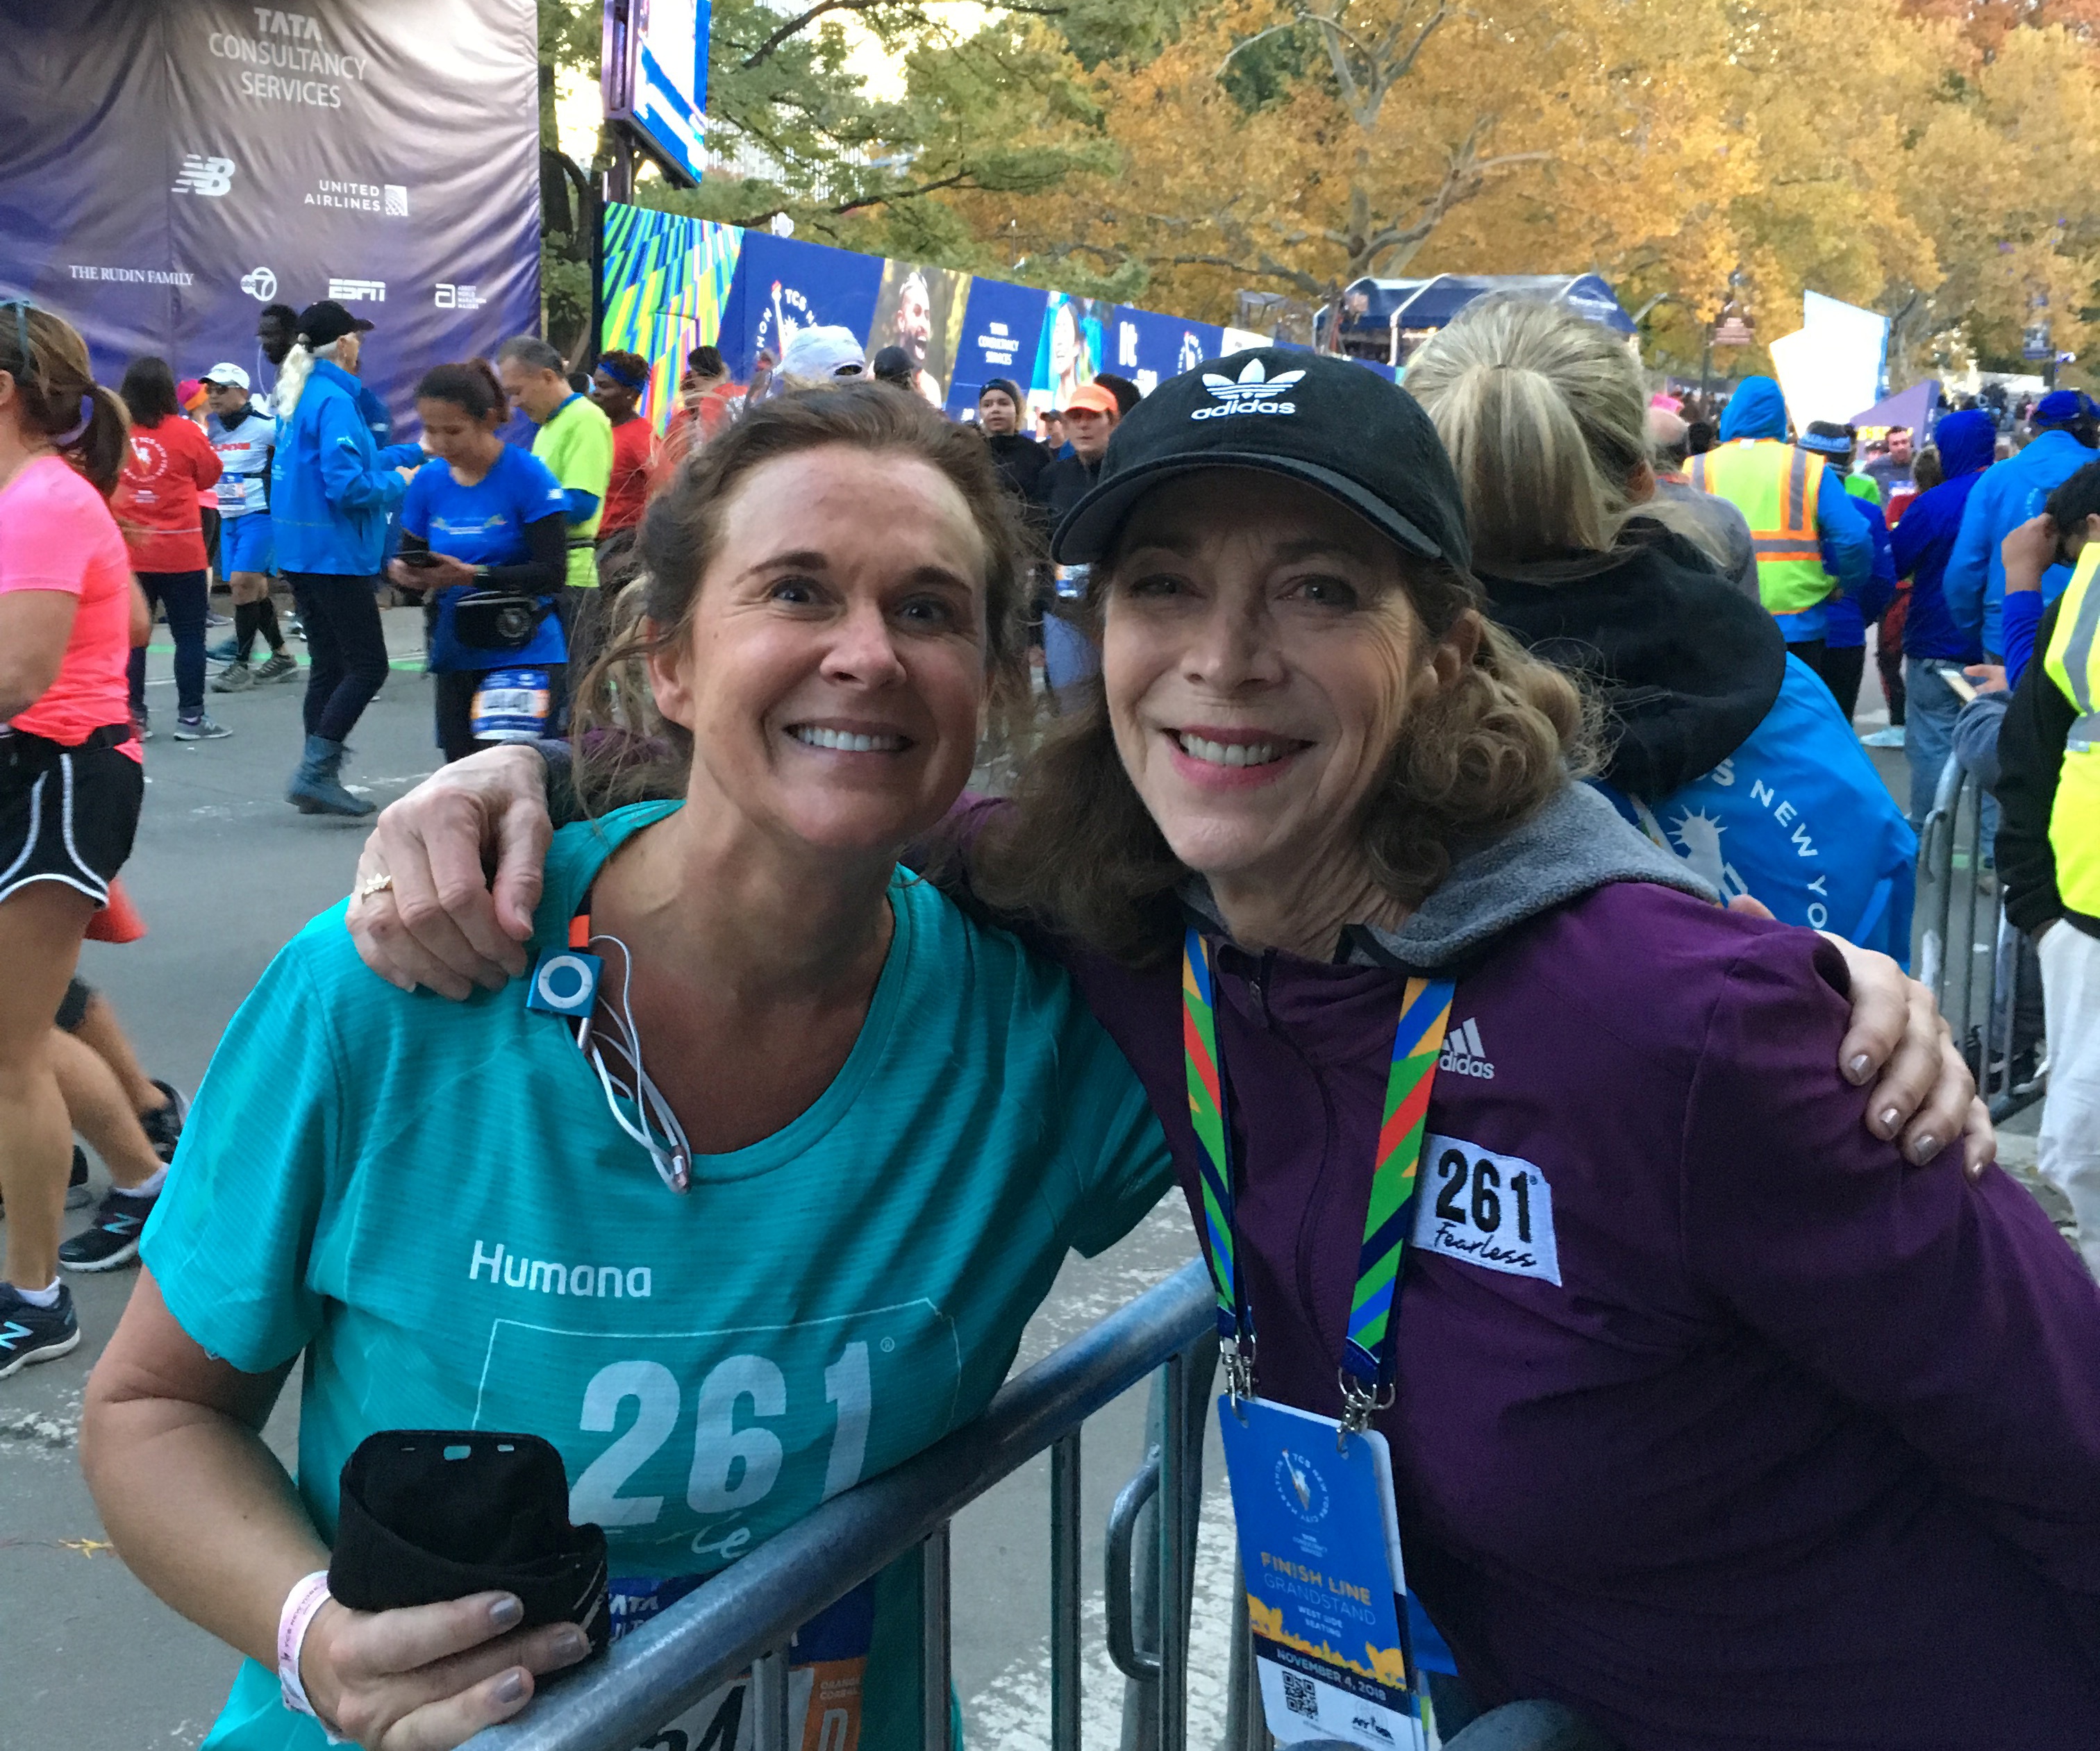 De Pere woman runs NYC Marathon for 261 Fearless